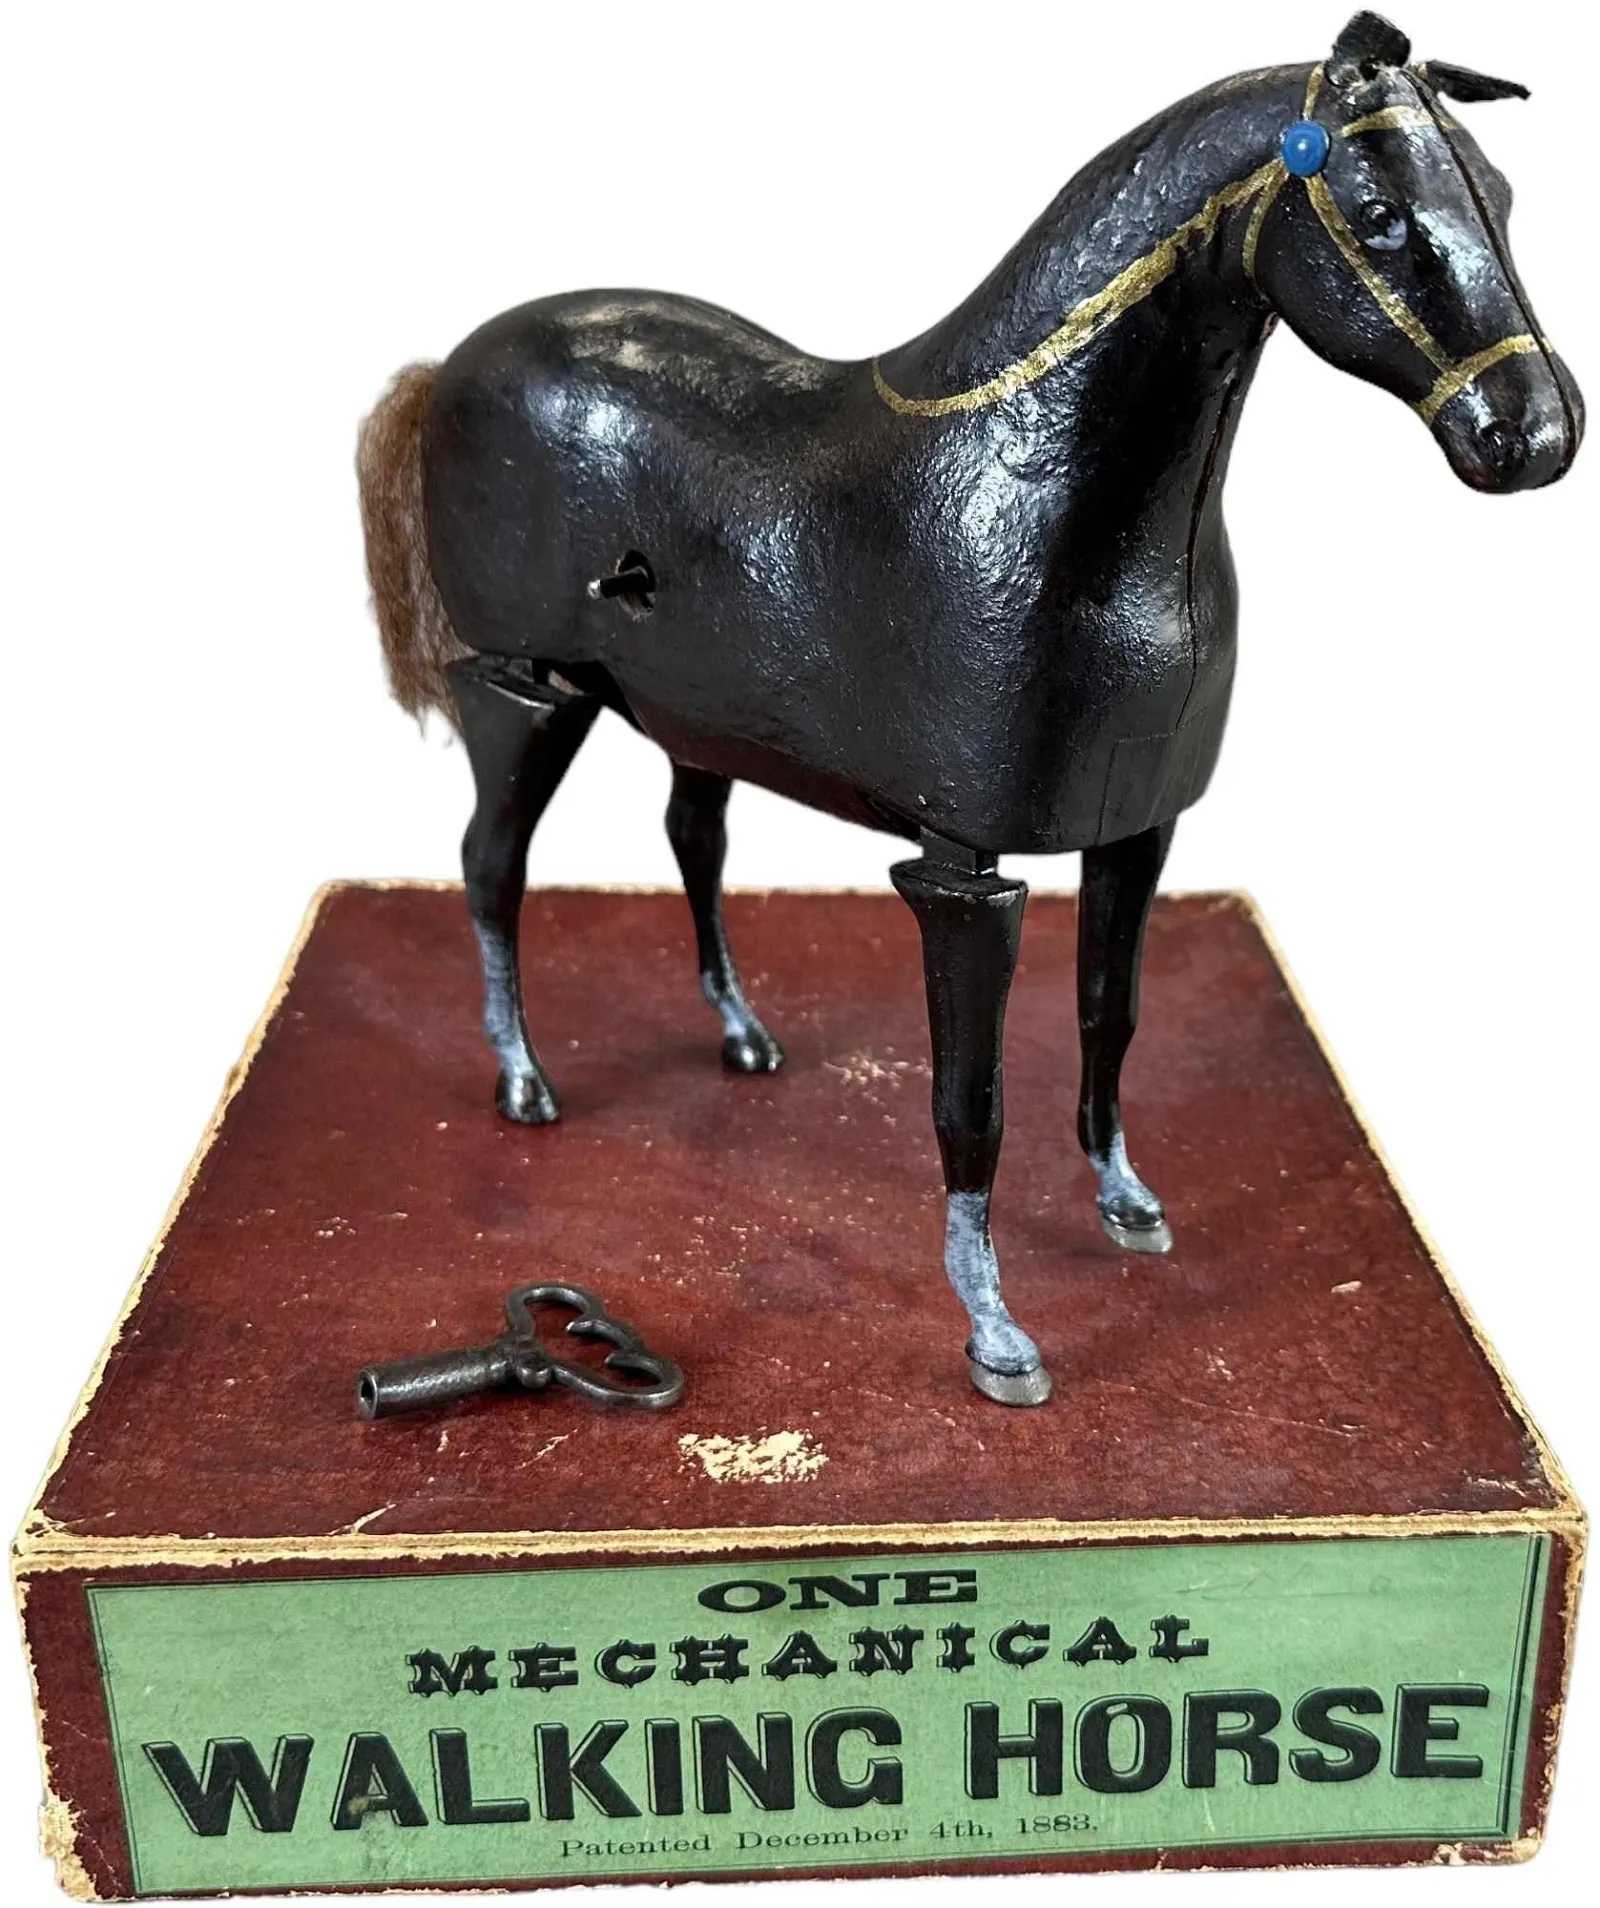 Ives Mechanical Walking Horse, estimated at $6,000-$9,000 at Bertoia.